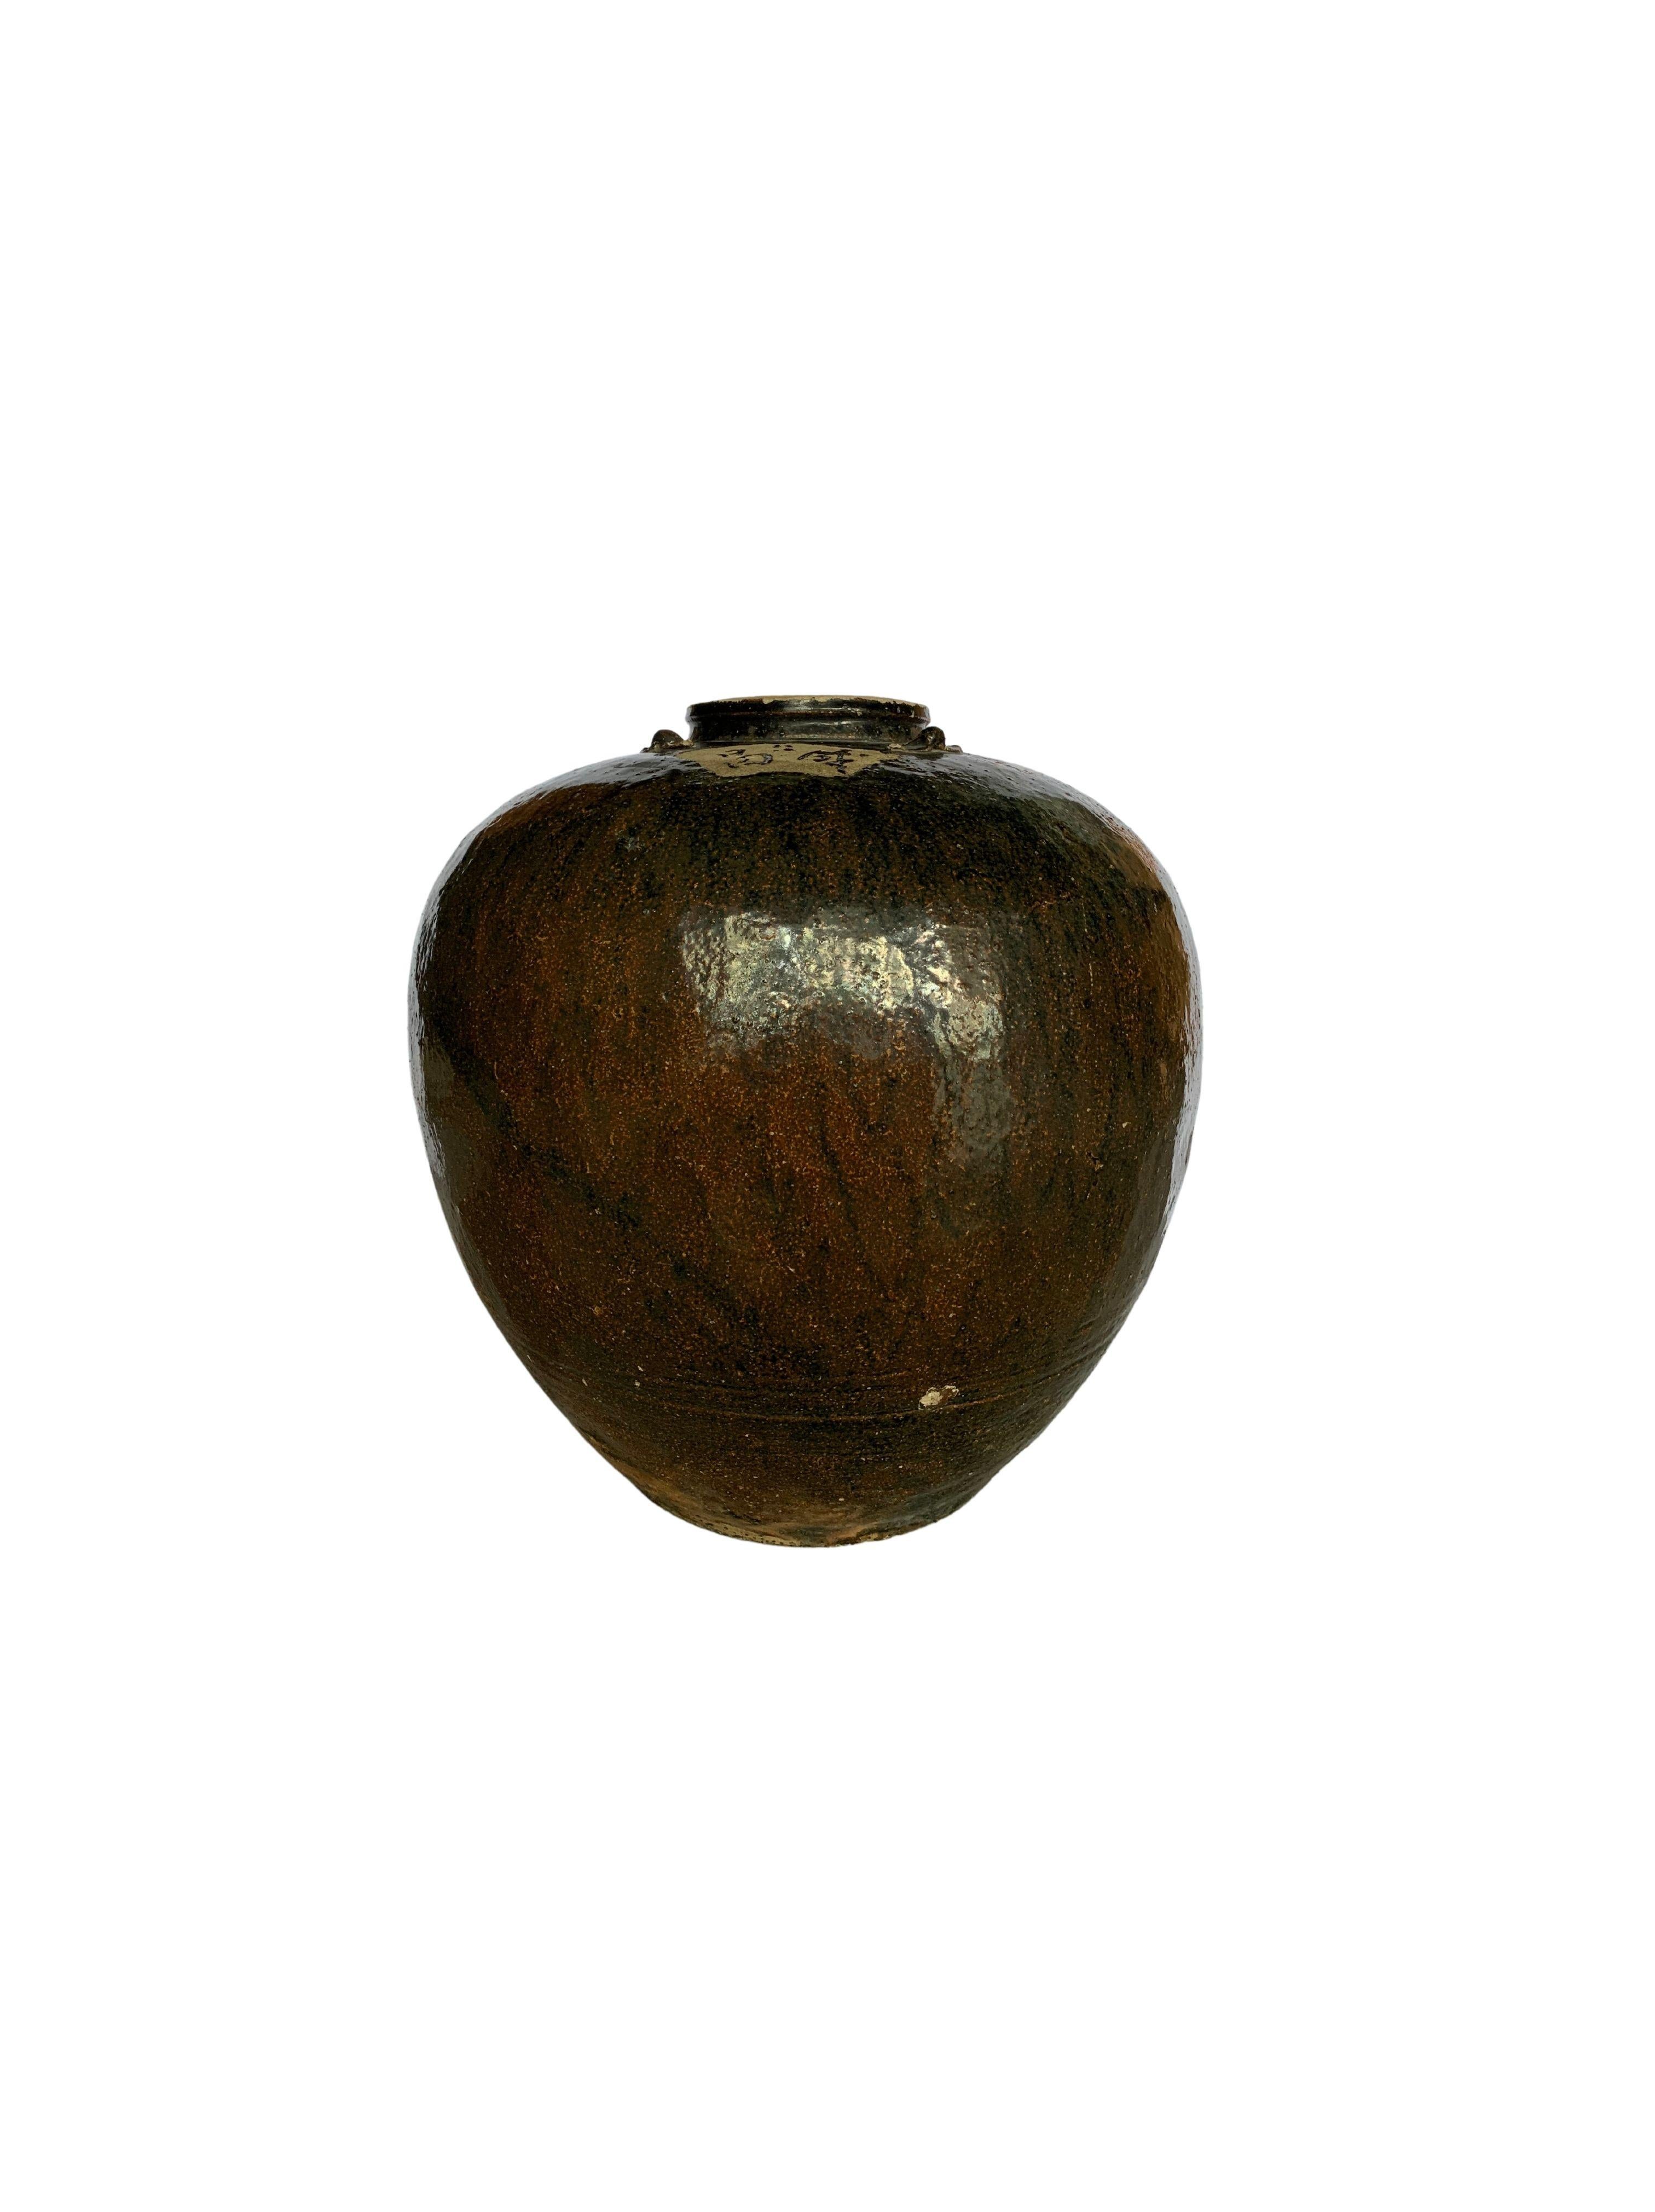 Antique Chinese Brown / Black Glazed Pickling Jar, c. 1900 For Sale 2